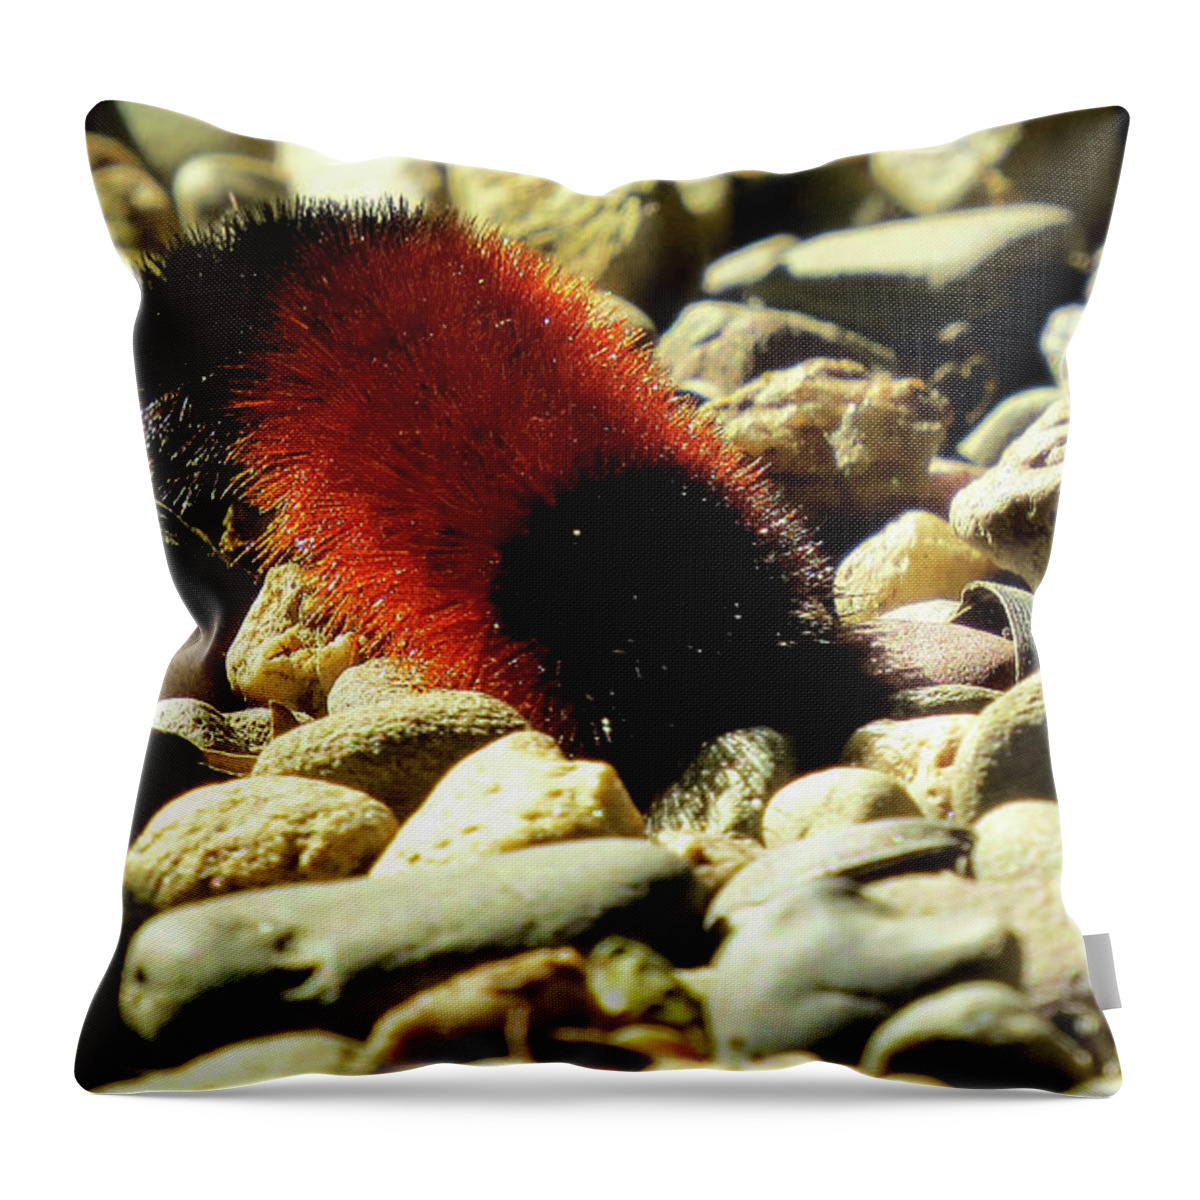 Woolly Bear Caterpillar Throw Pillow featuring the photograph Woolly Bear Caterpillar on the Rocks by Linda Stern